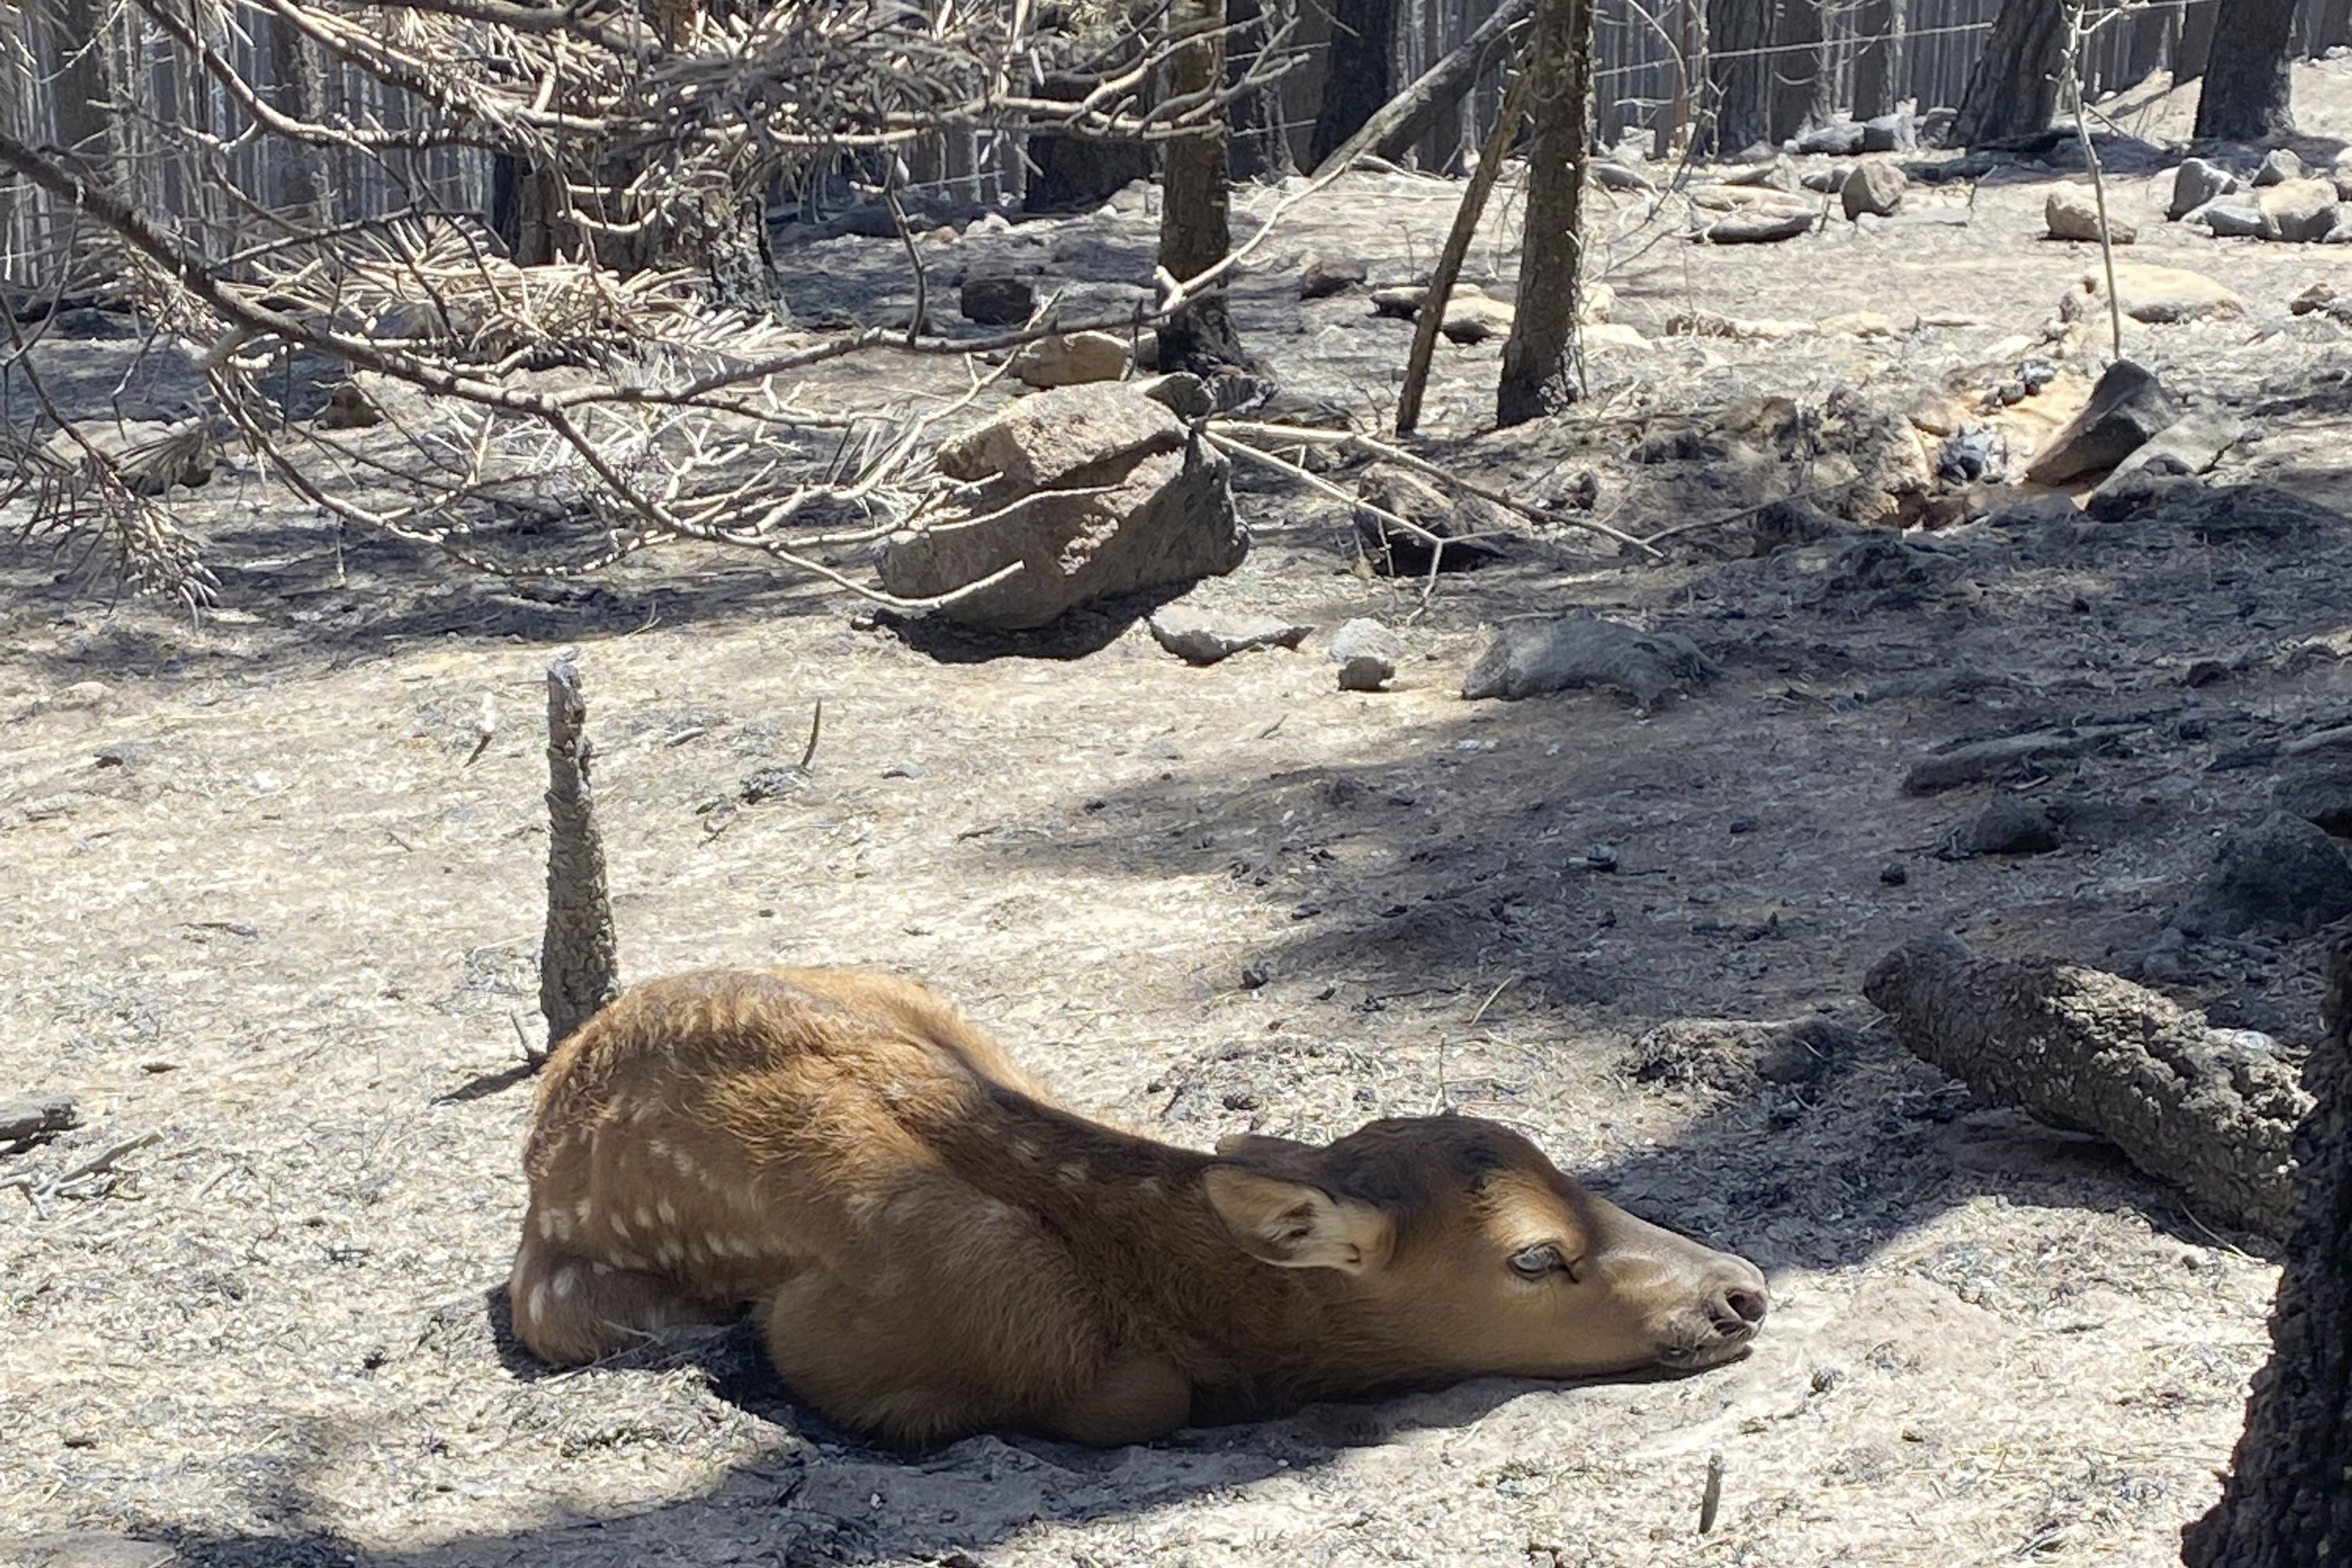 The elk calf rests alone